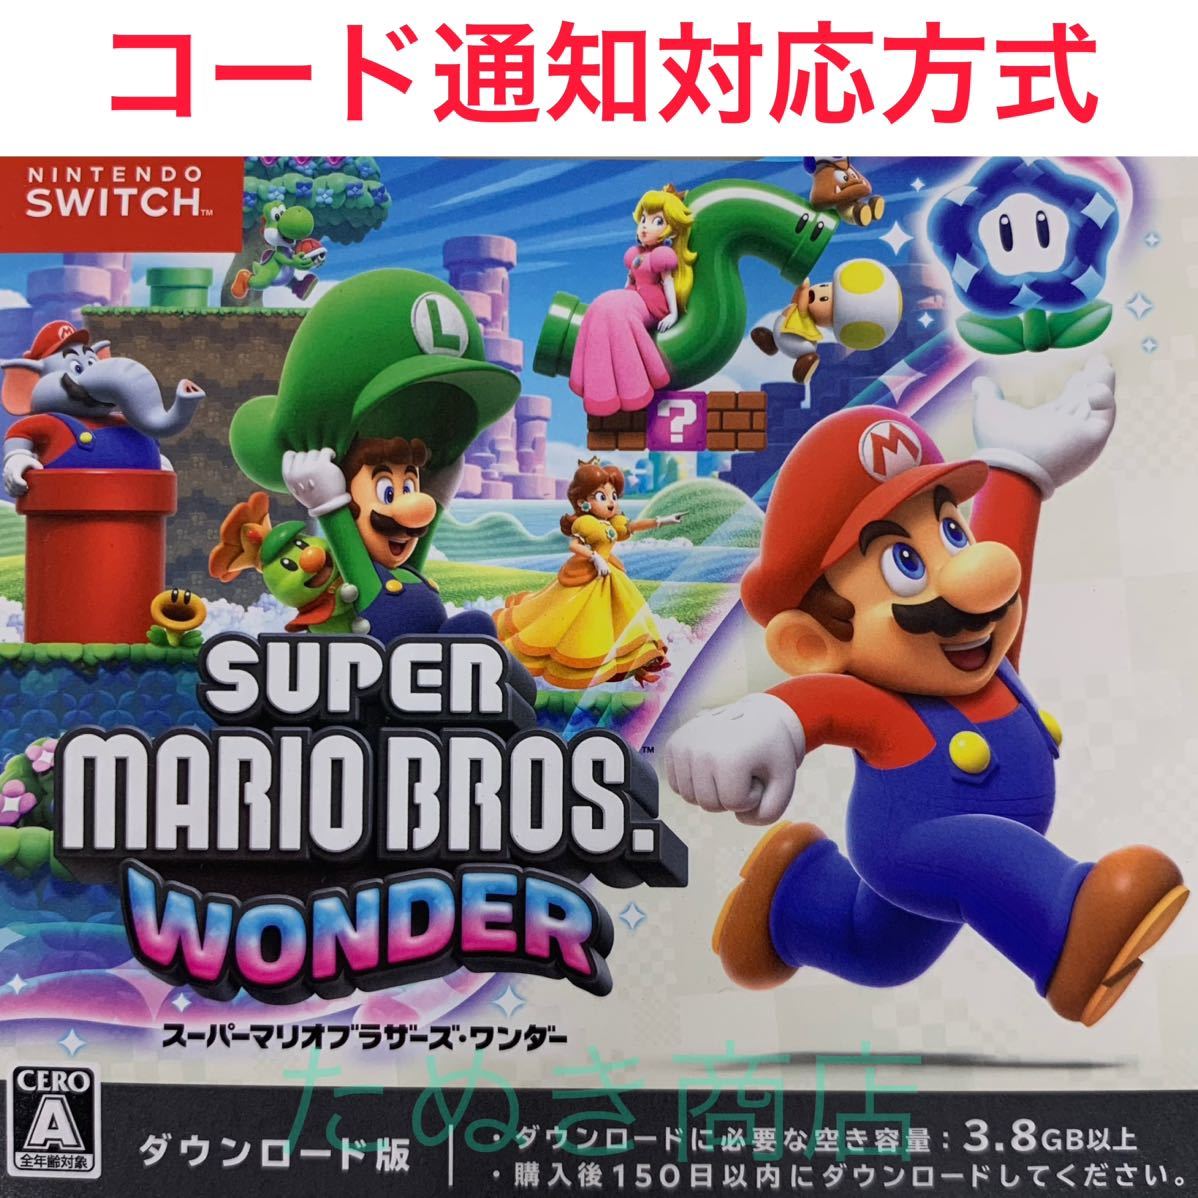  Super Mario Brothers wonder download version 